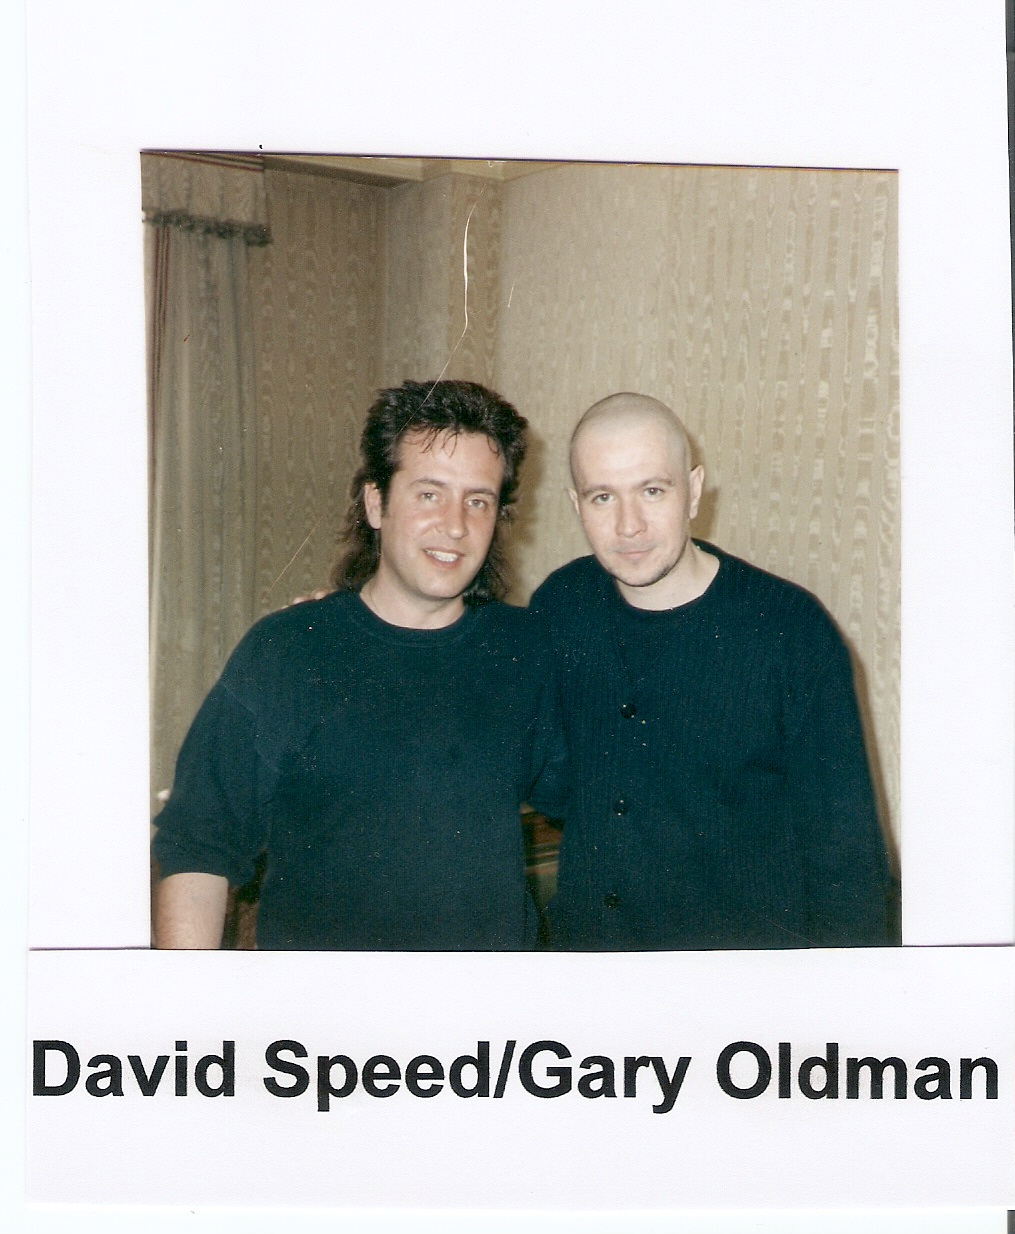 David Speed / Gary Oldman voice over